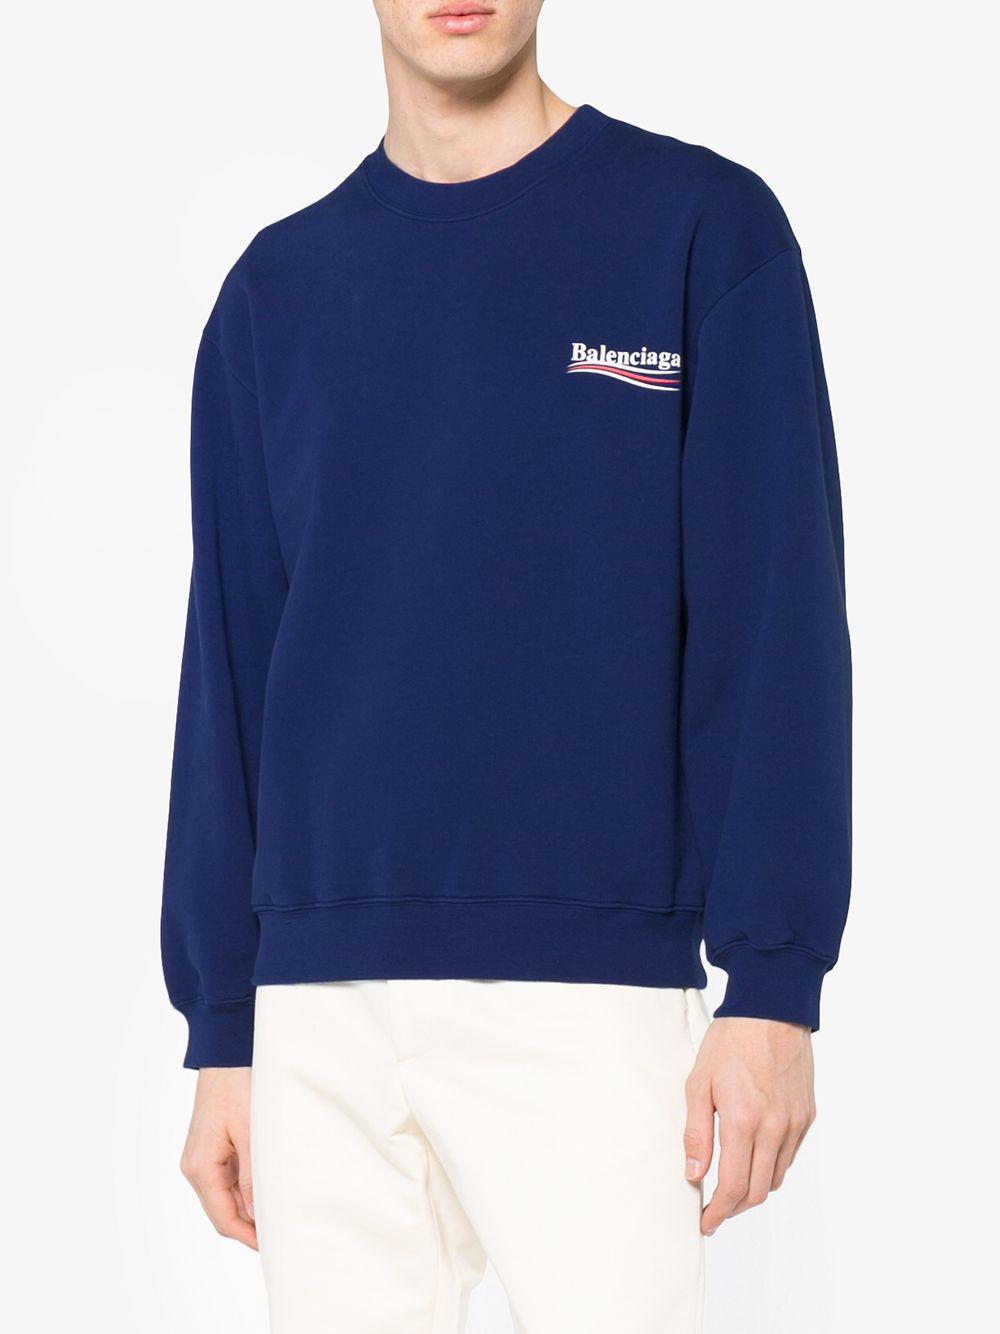 Balenciaga Cotton Logo Print Sweater in Blue for Men - Lyst